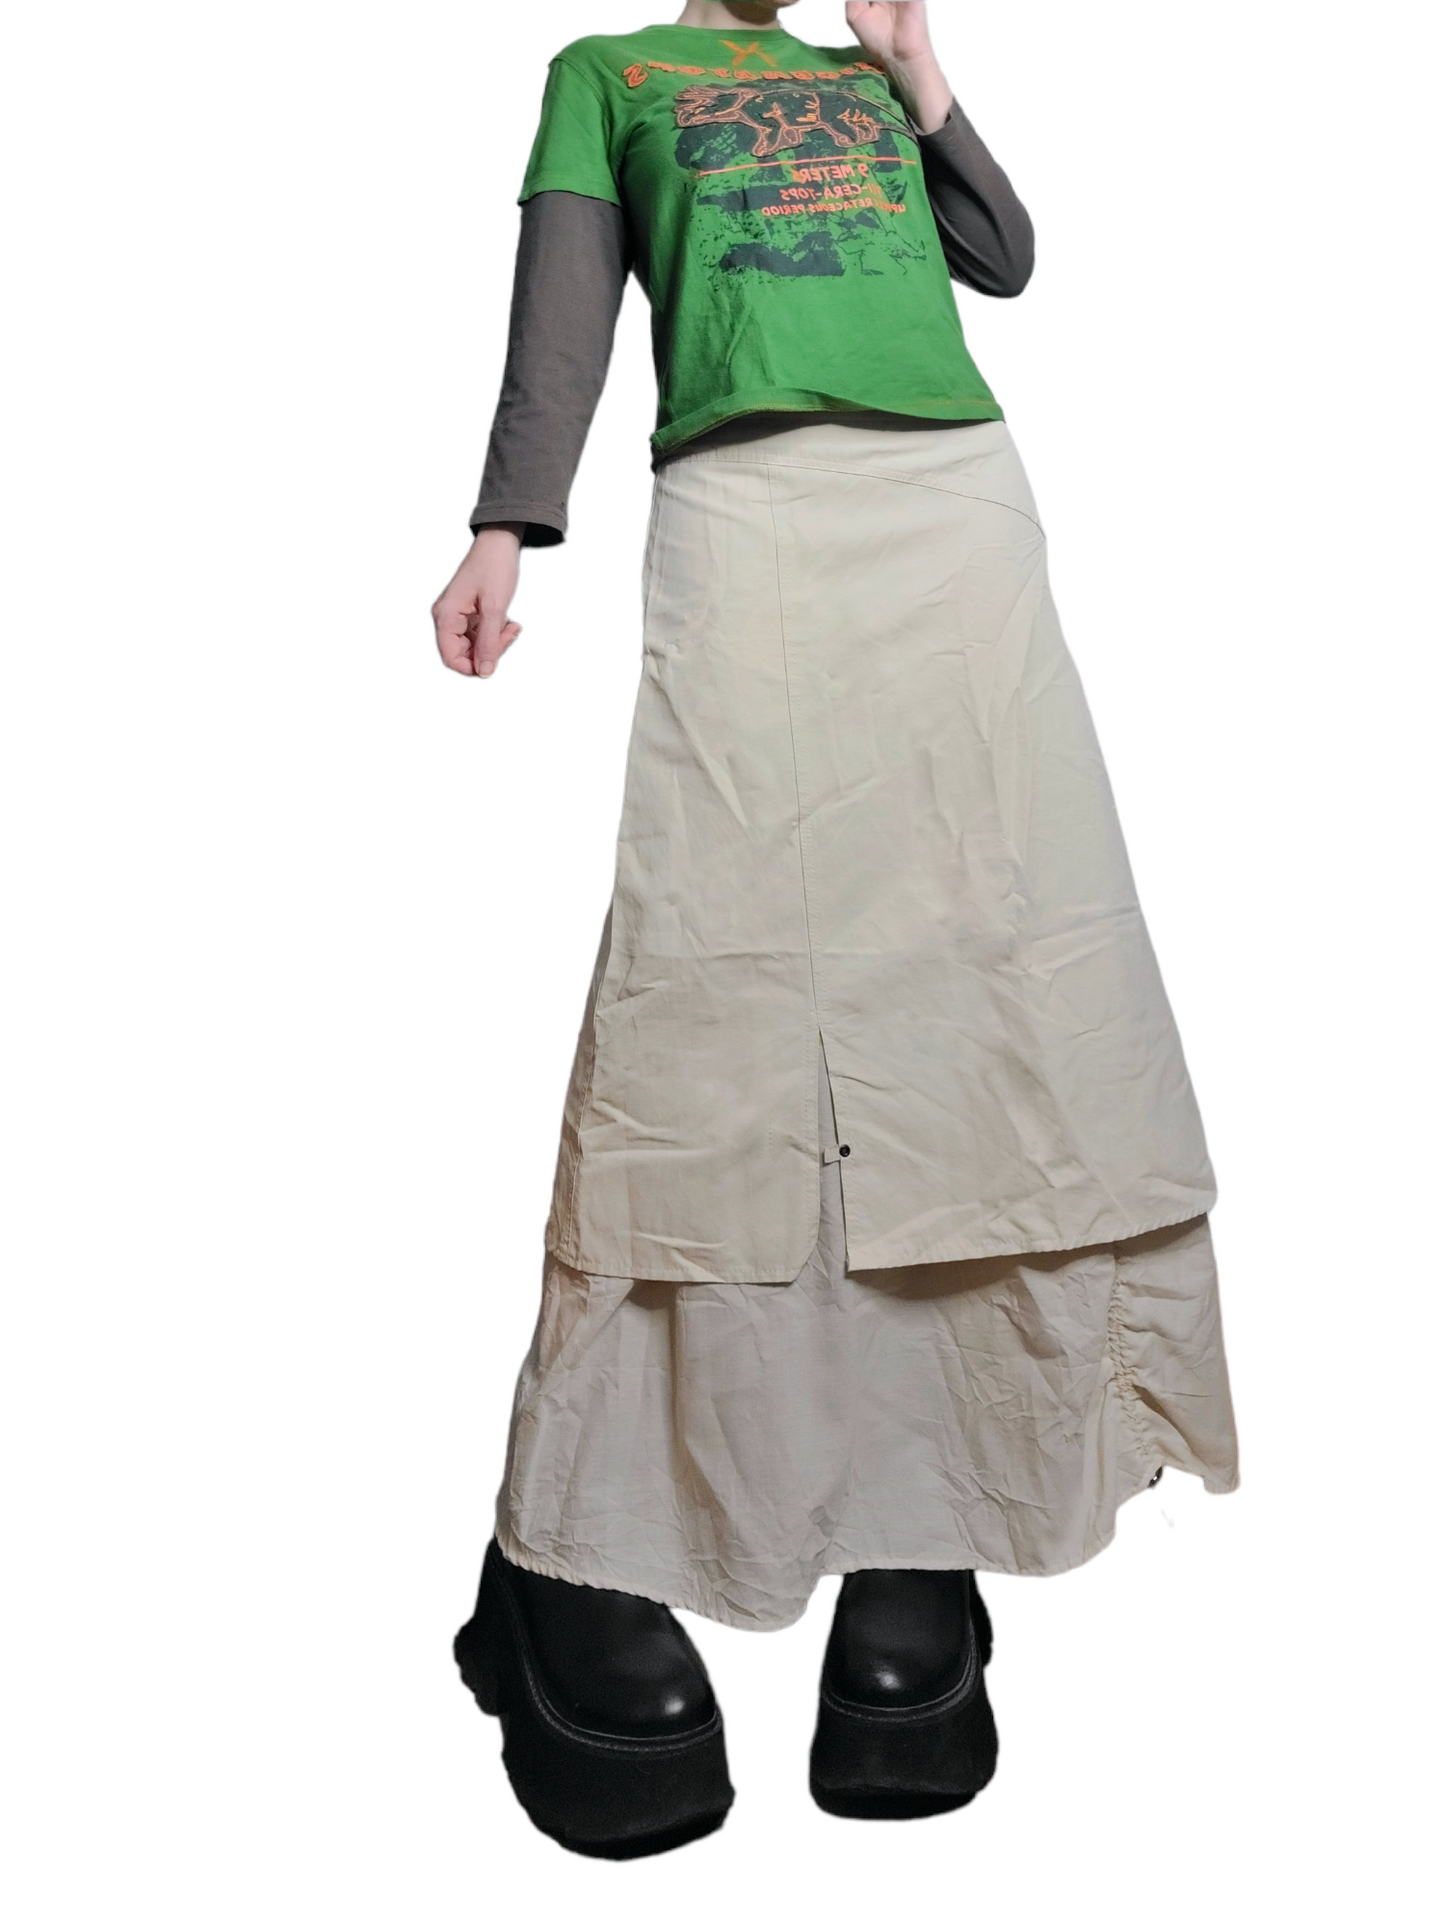 Maxi skirt harajuku gorpcore vintage creme subversive style techwear